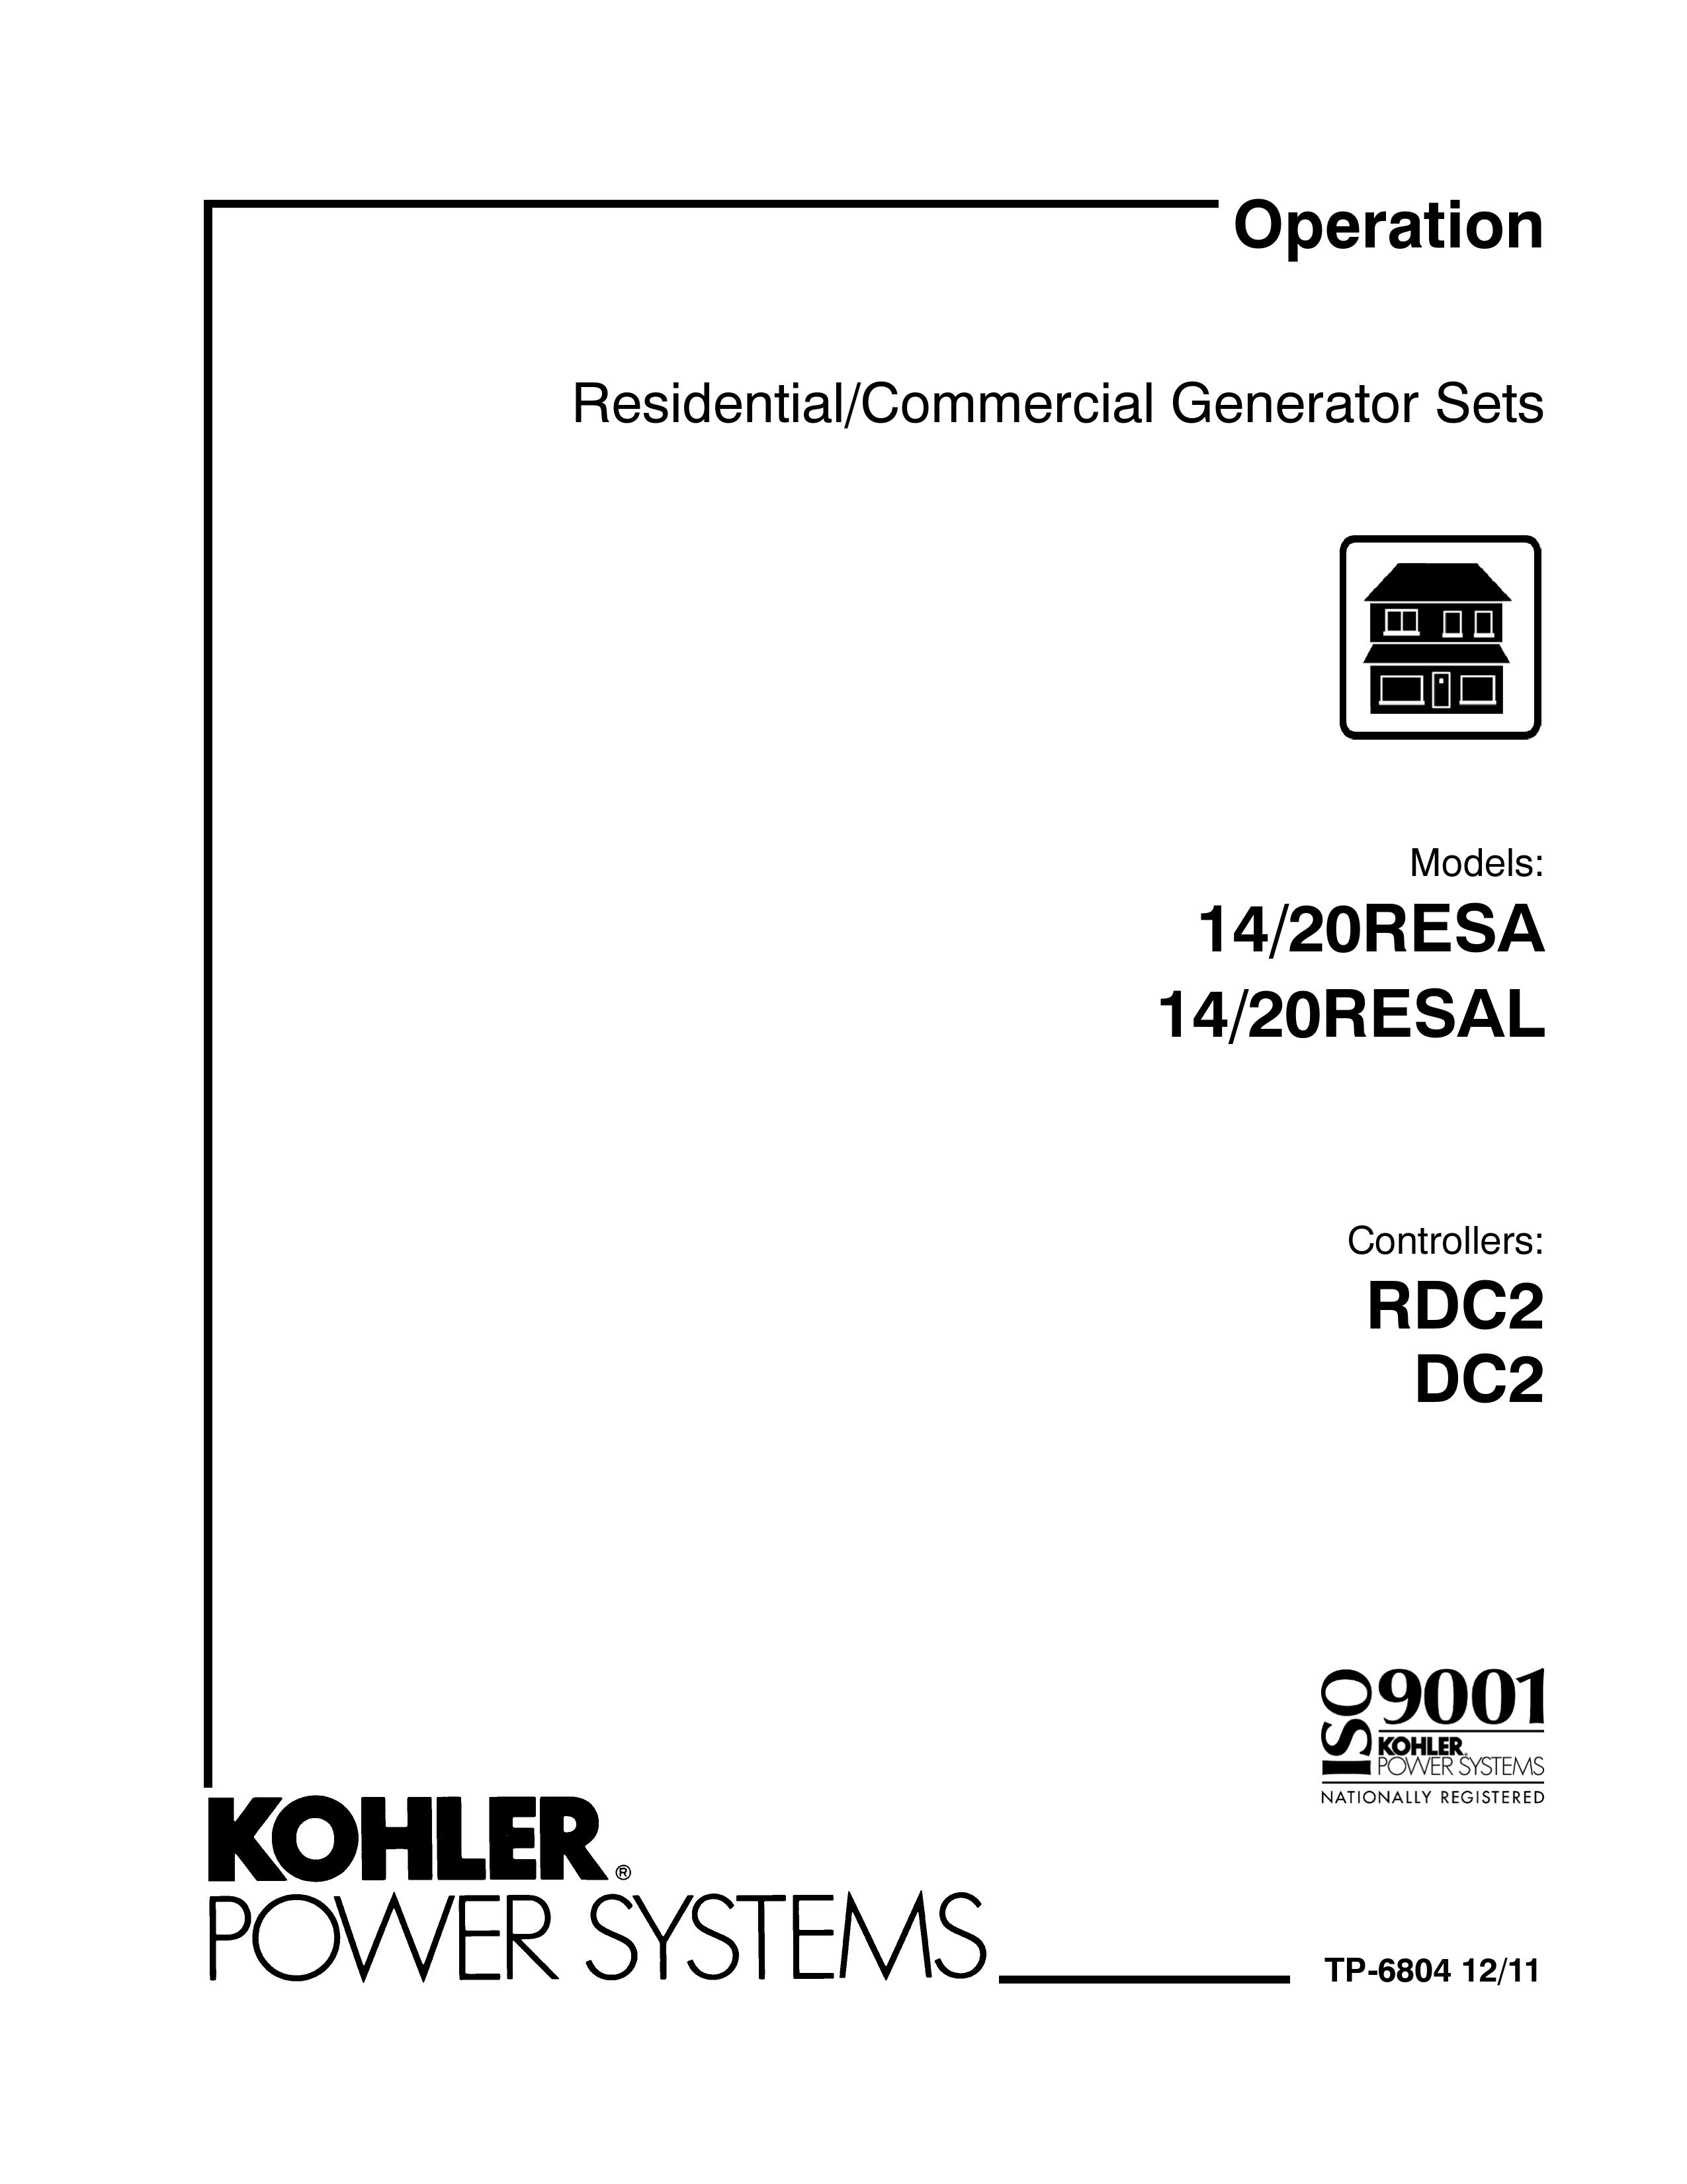 Kohler 14/20RESAL Portable Generator User Manual